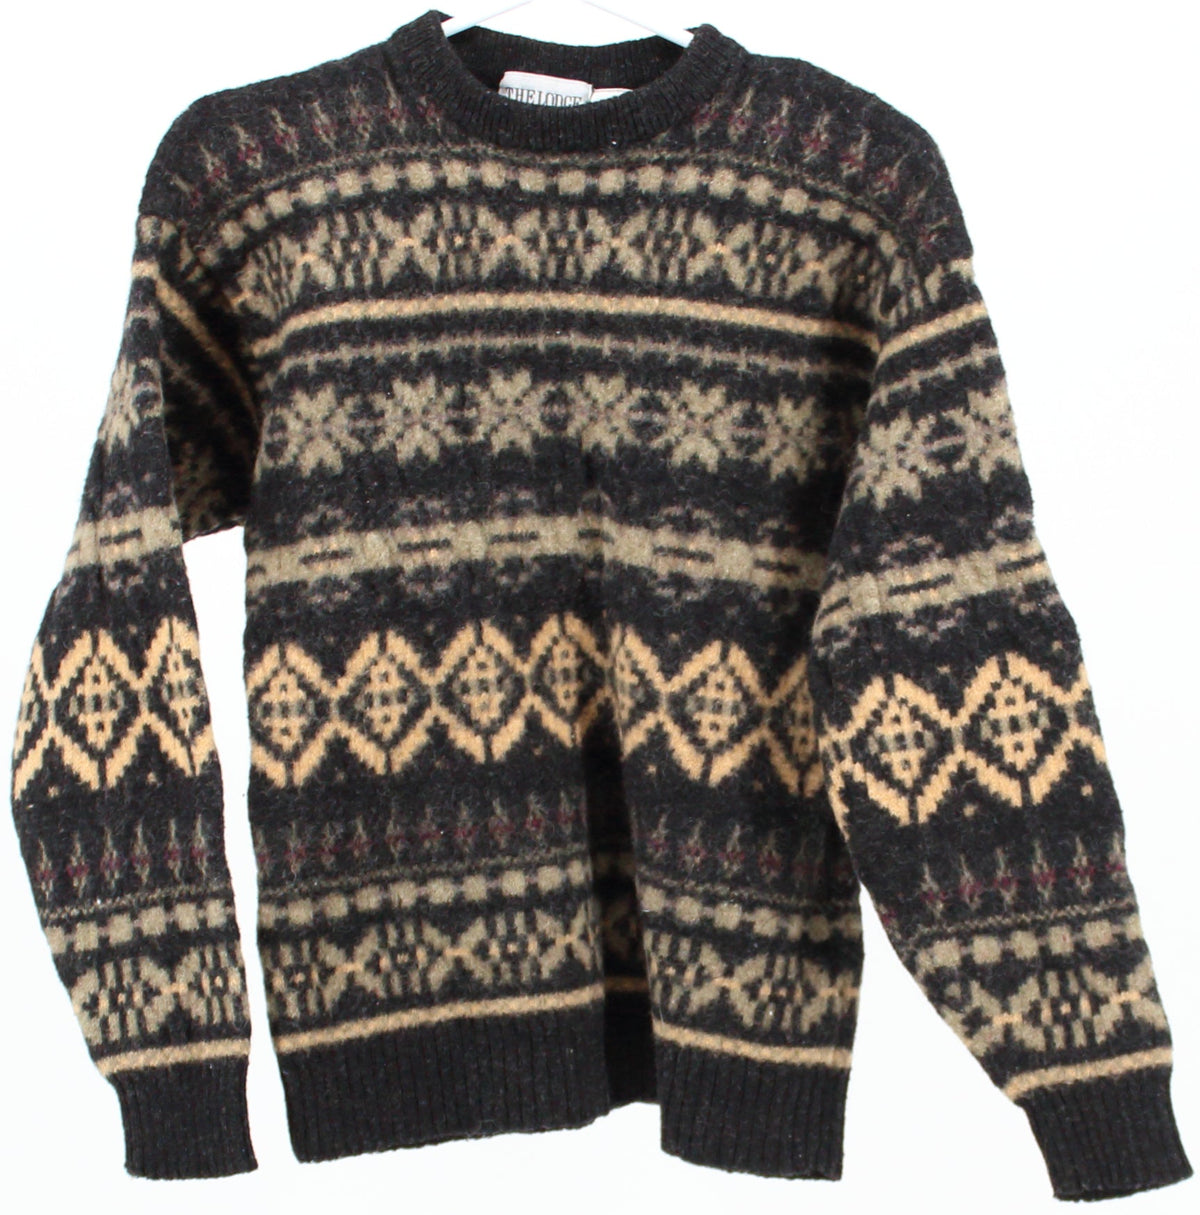 The Lodge Jacquard Knit Sweater